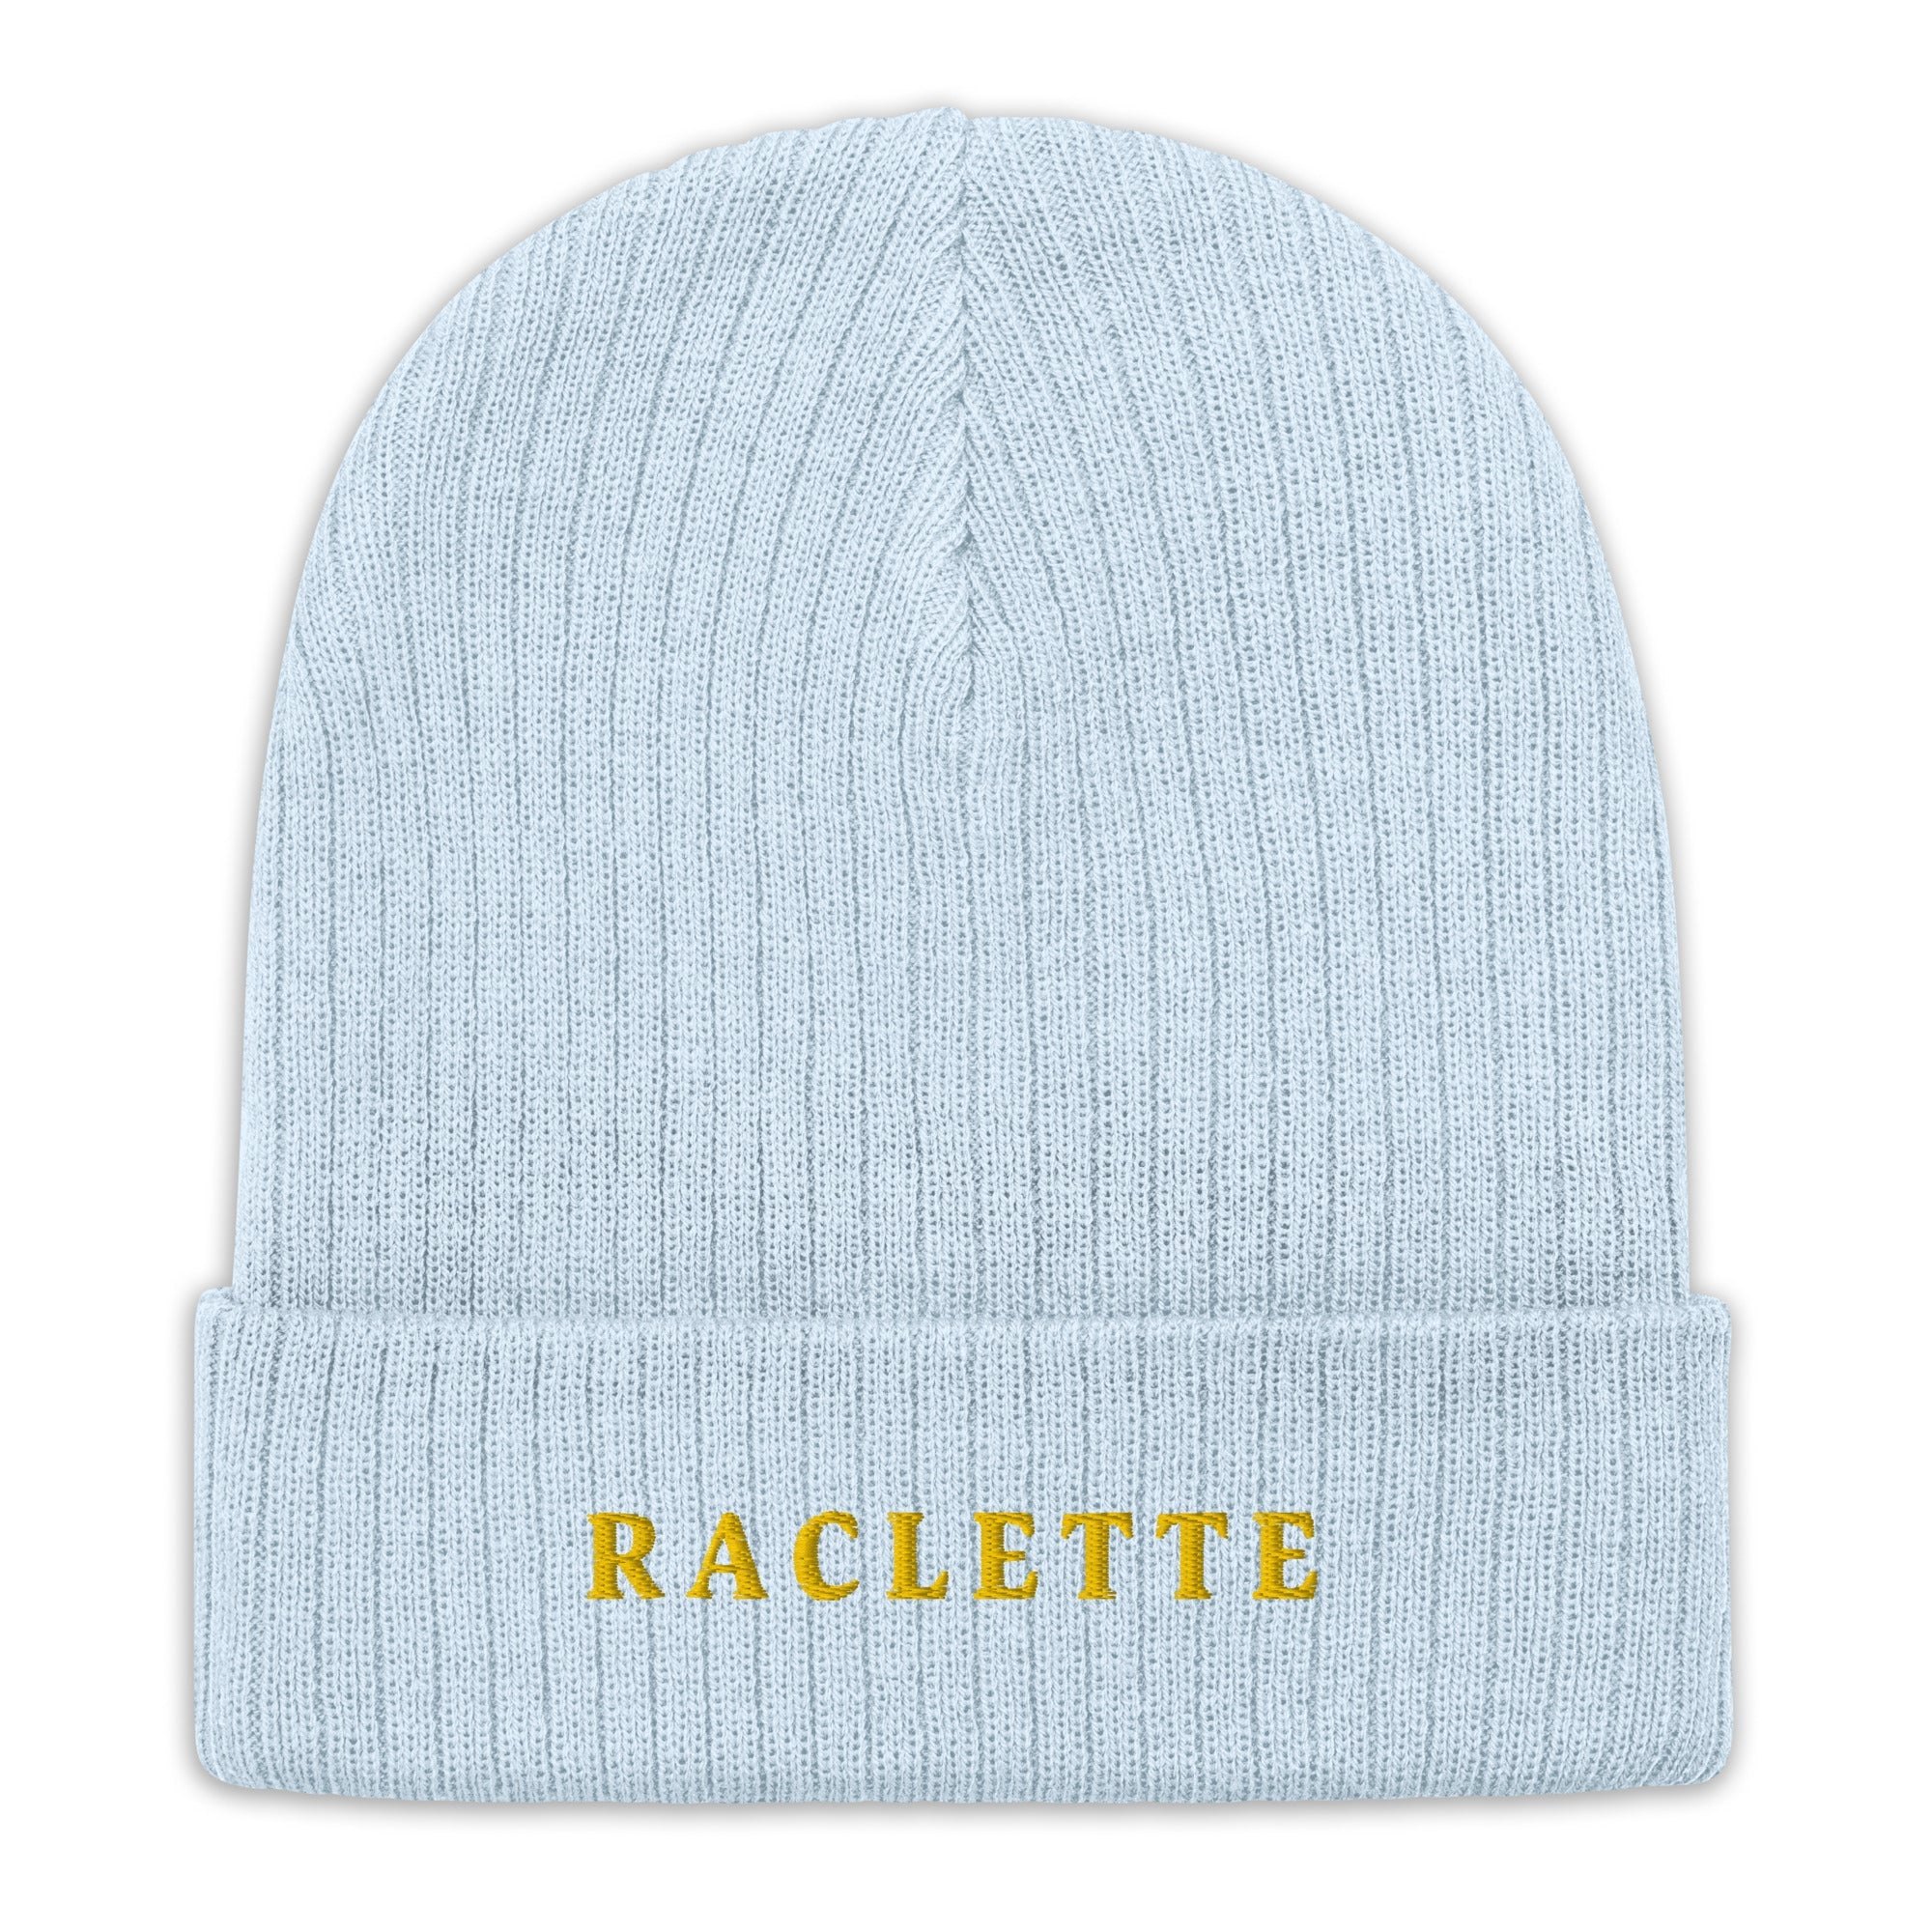 Raclette - Beanie - The Refined Spirit